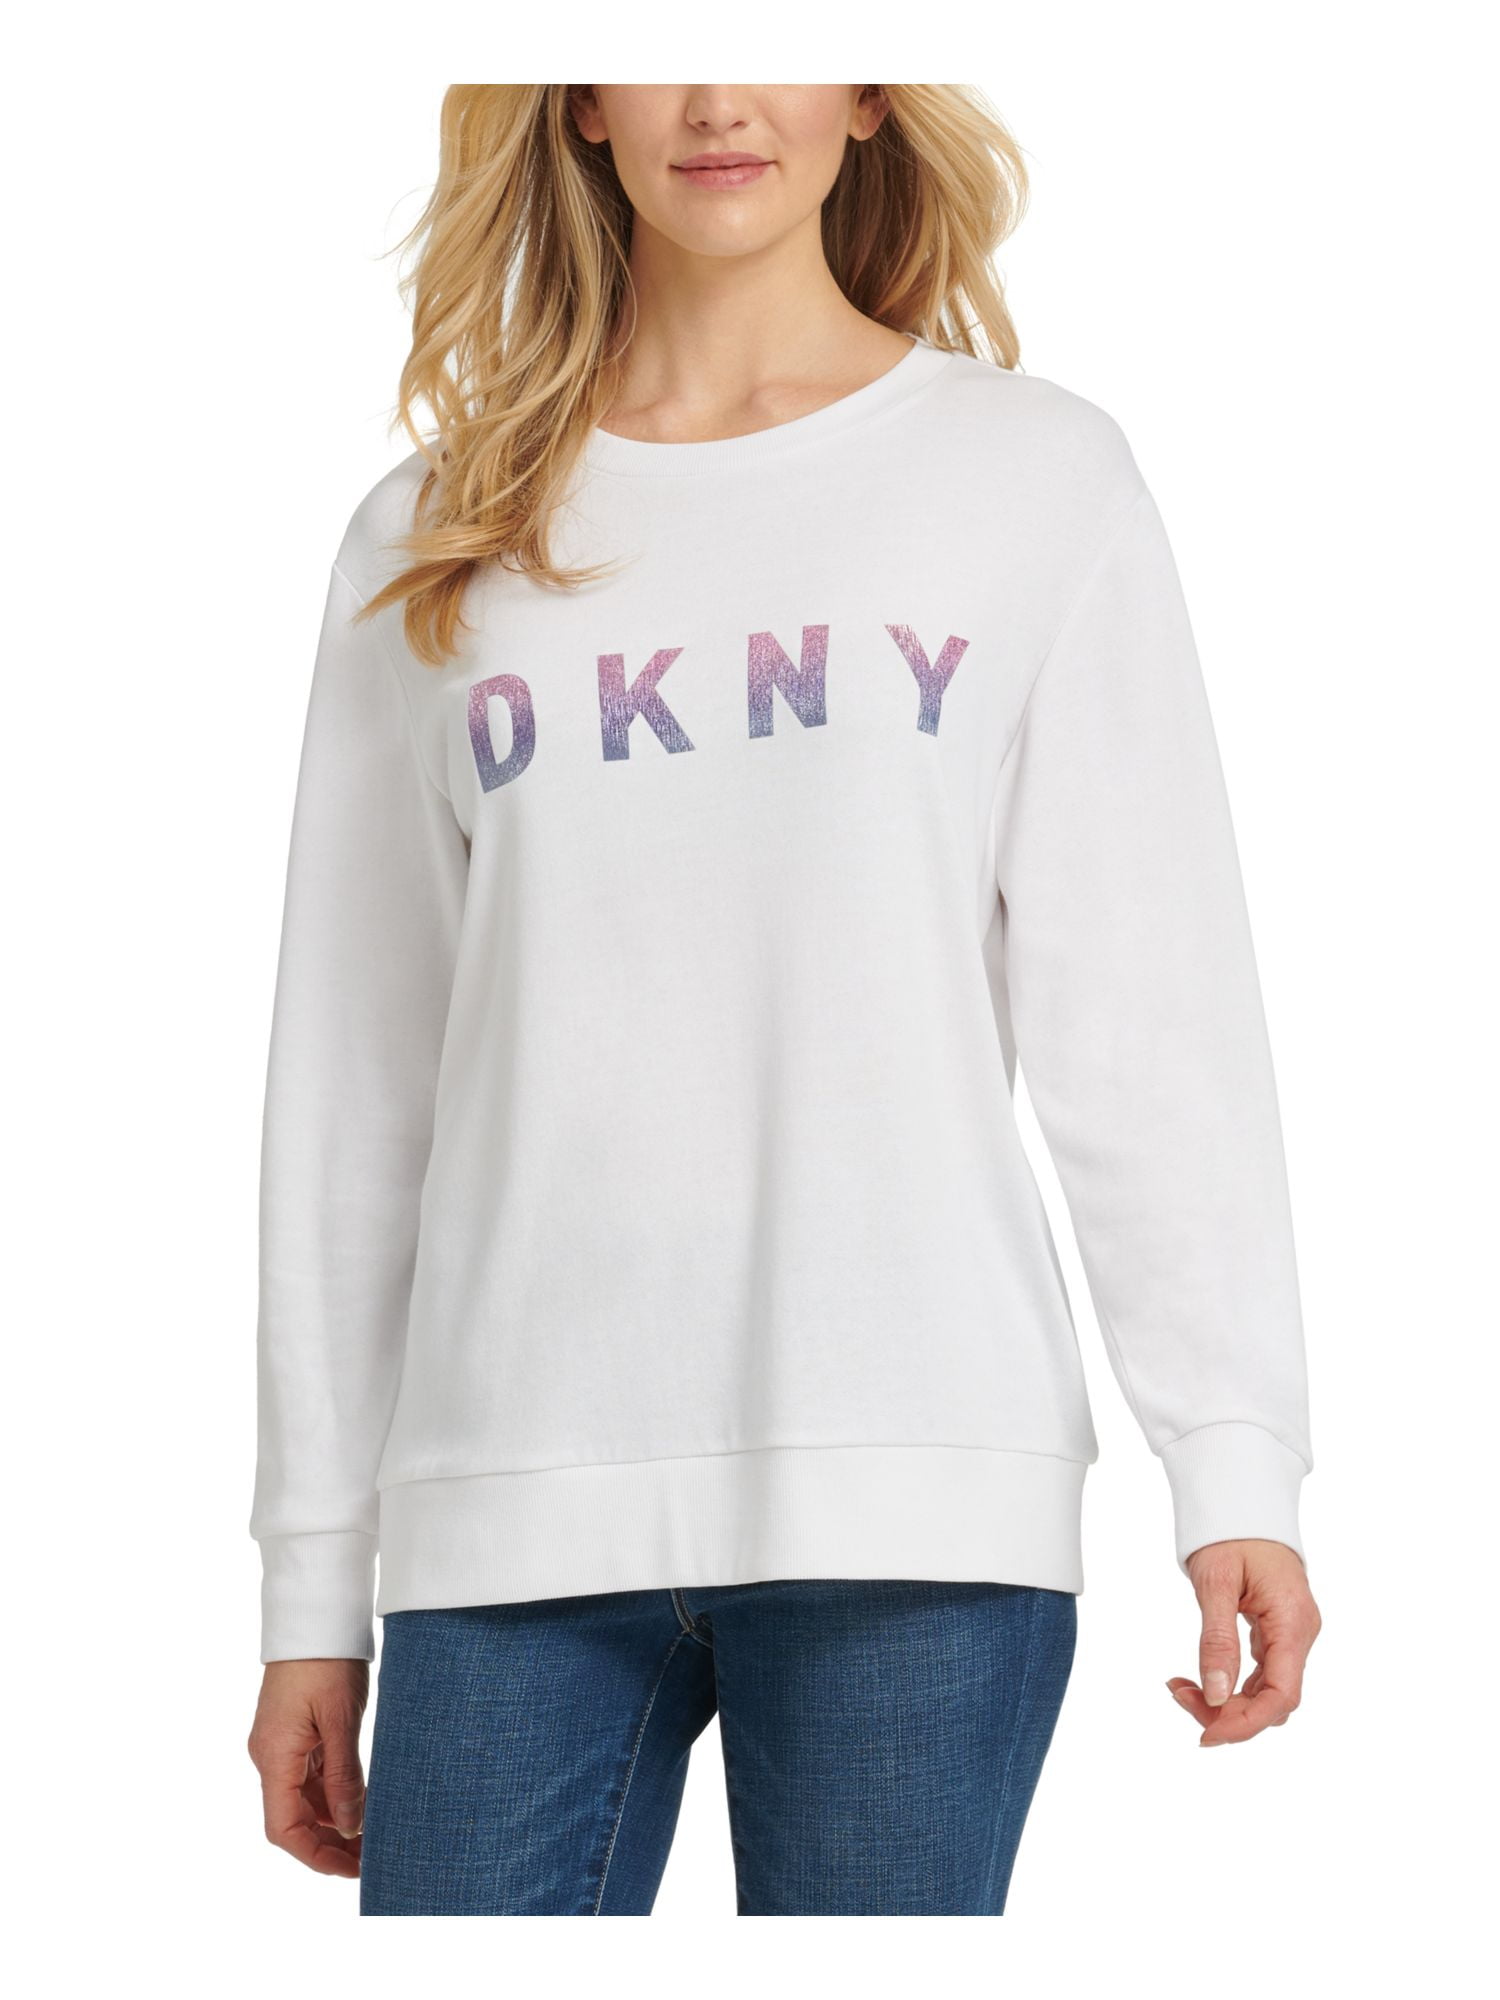 DKNY Womens White Glitter Printed Long Sleeve Jewel Neck T-Shirt L